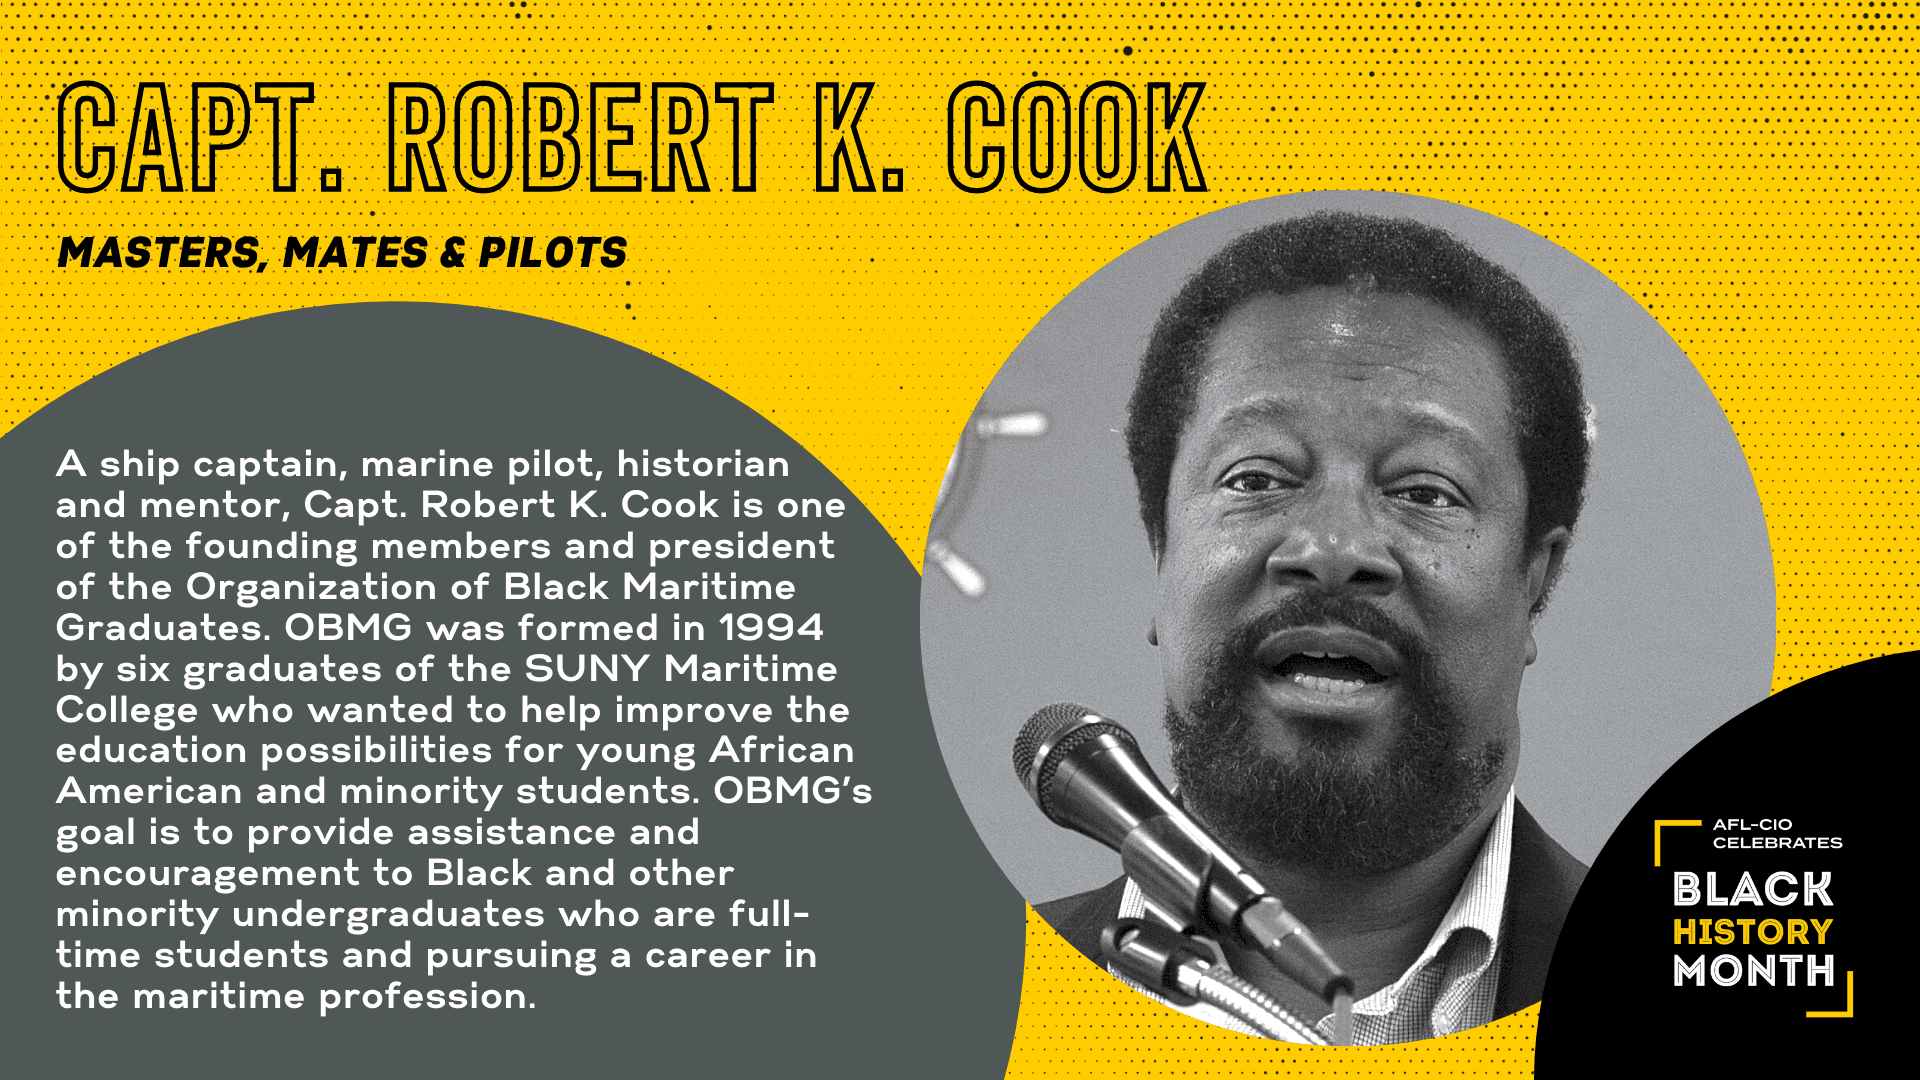 Robert K. Cook